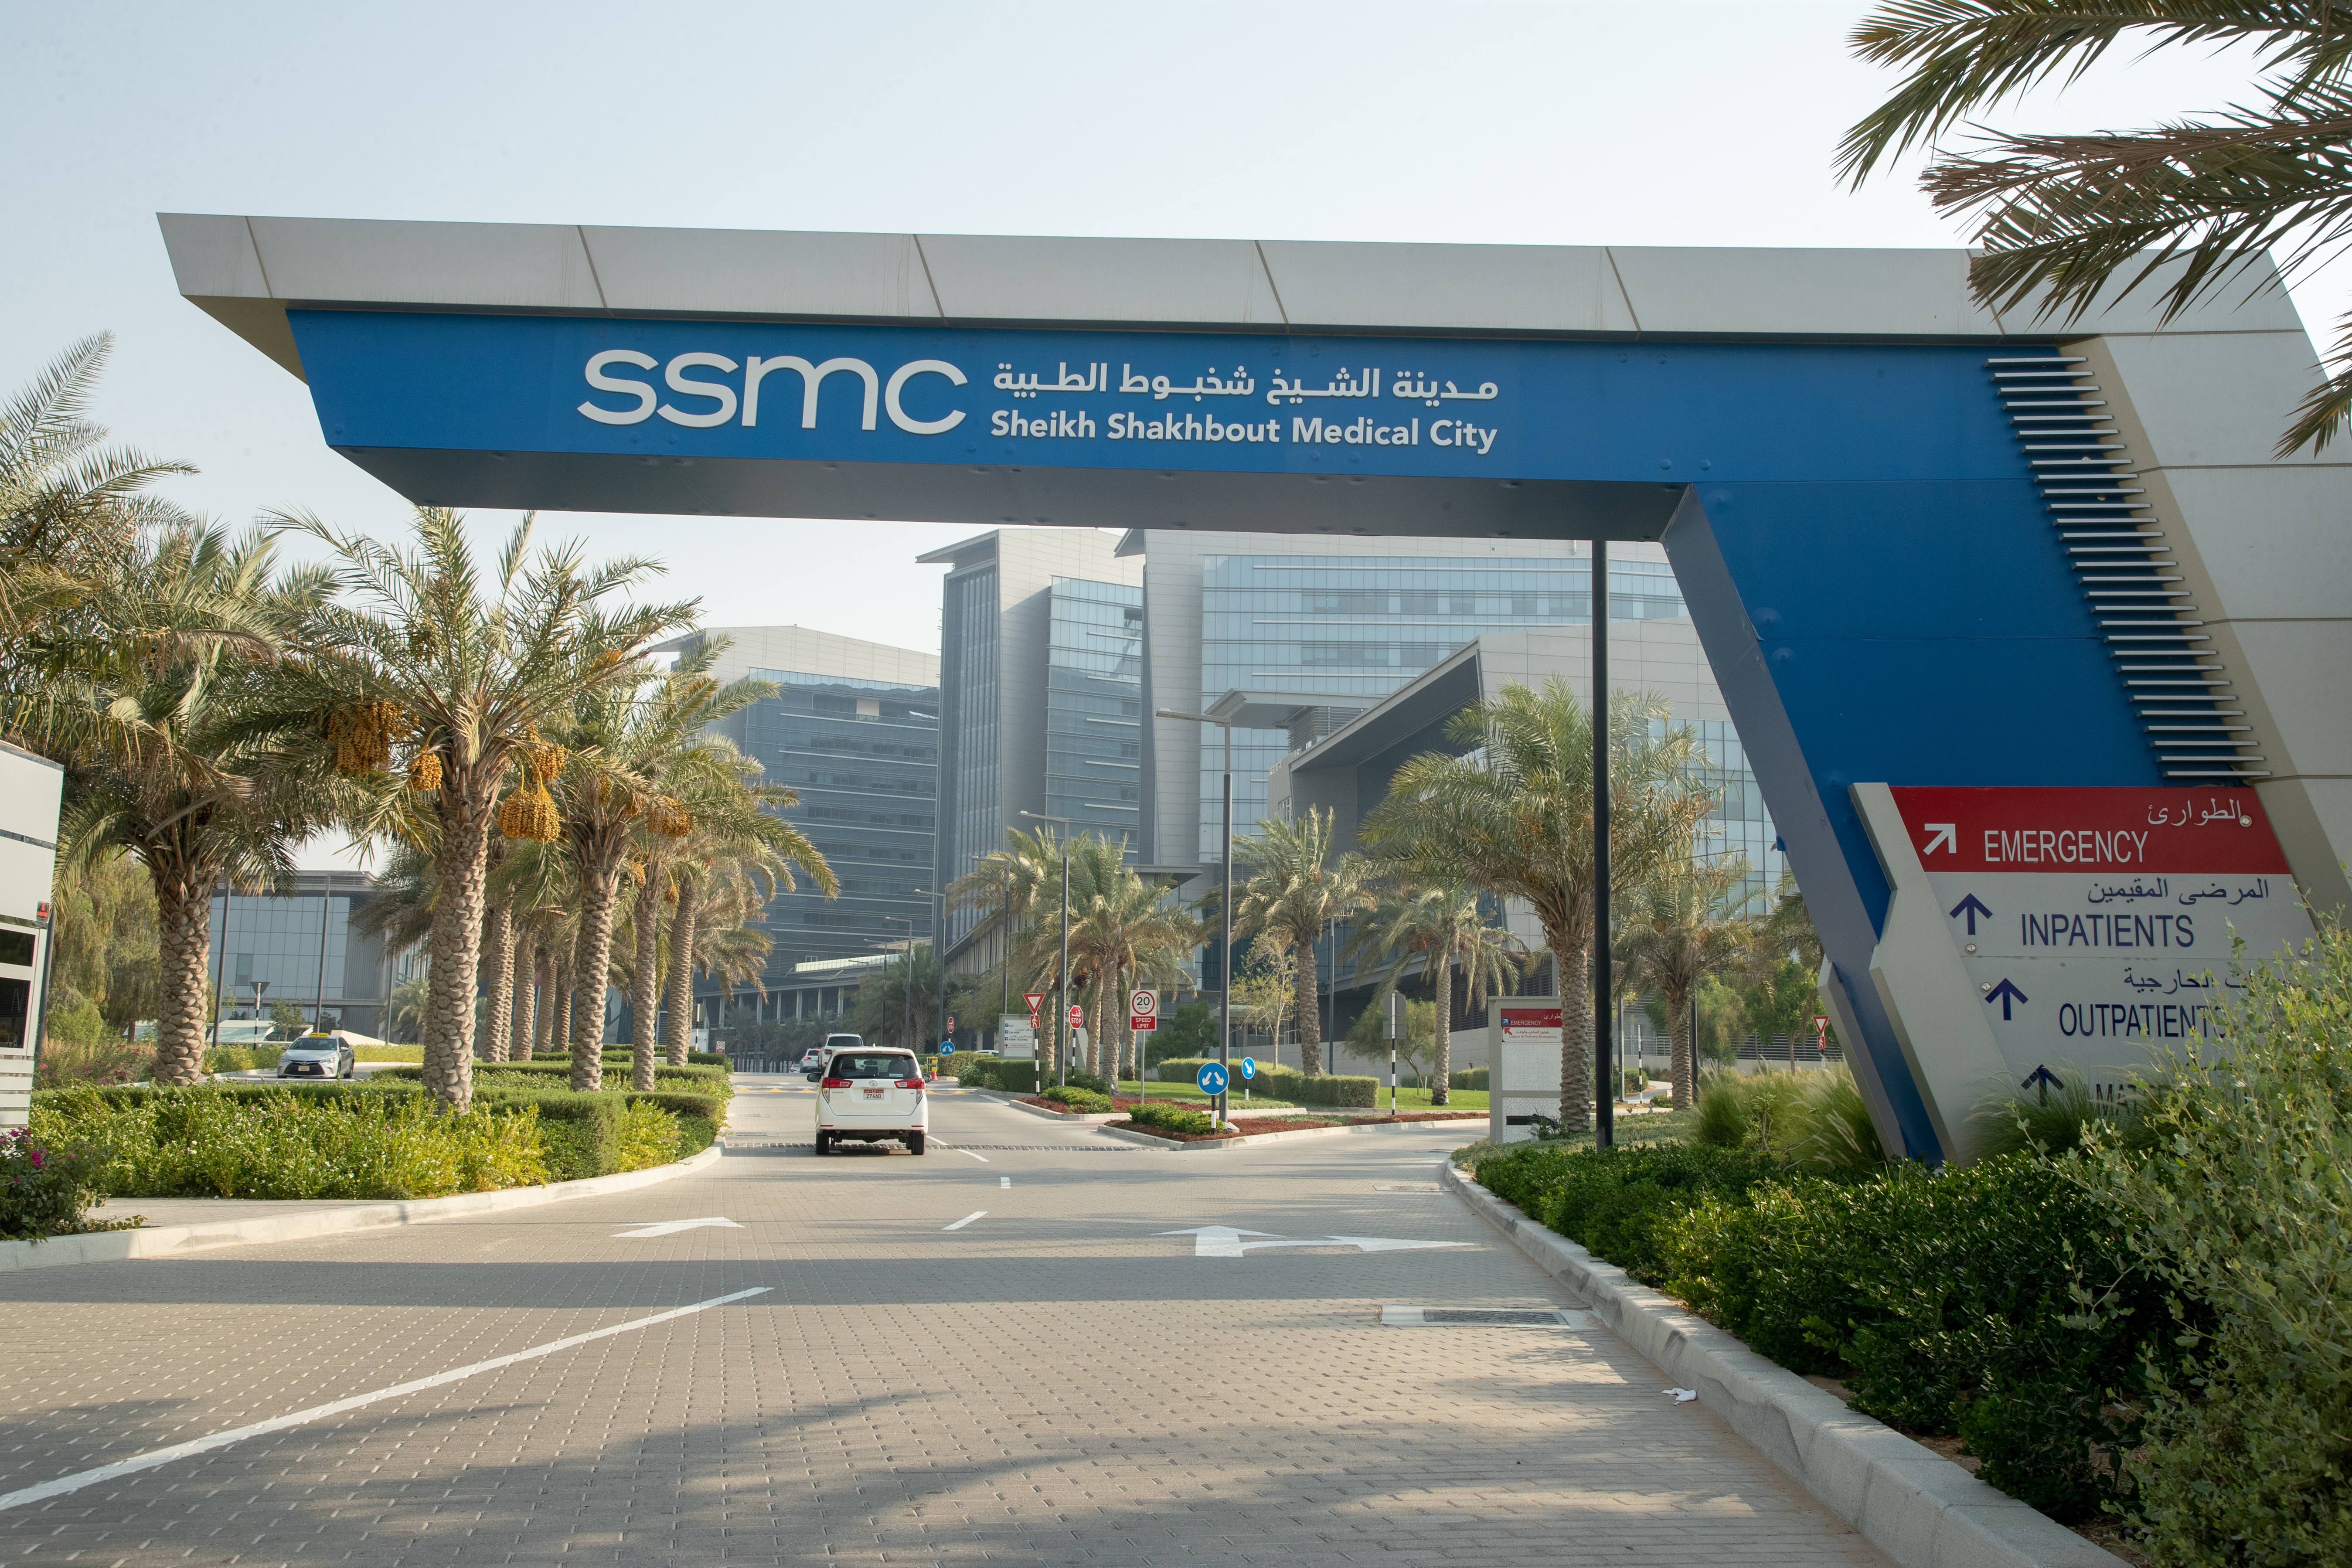 exterior image of entrance to Sheikh Shakhbout Medical City (SSMC)